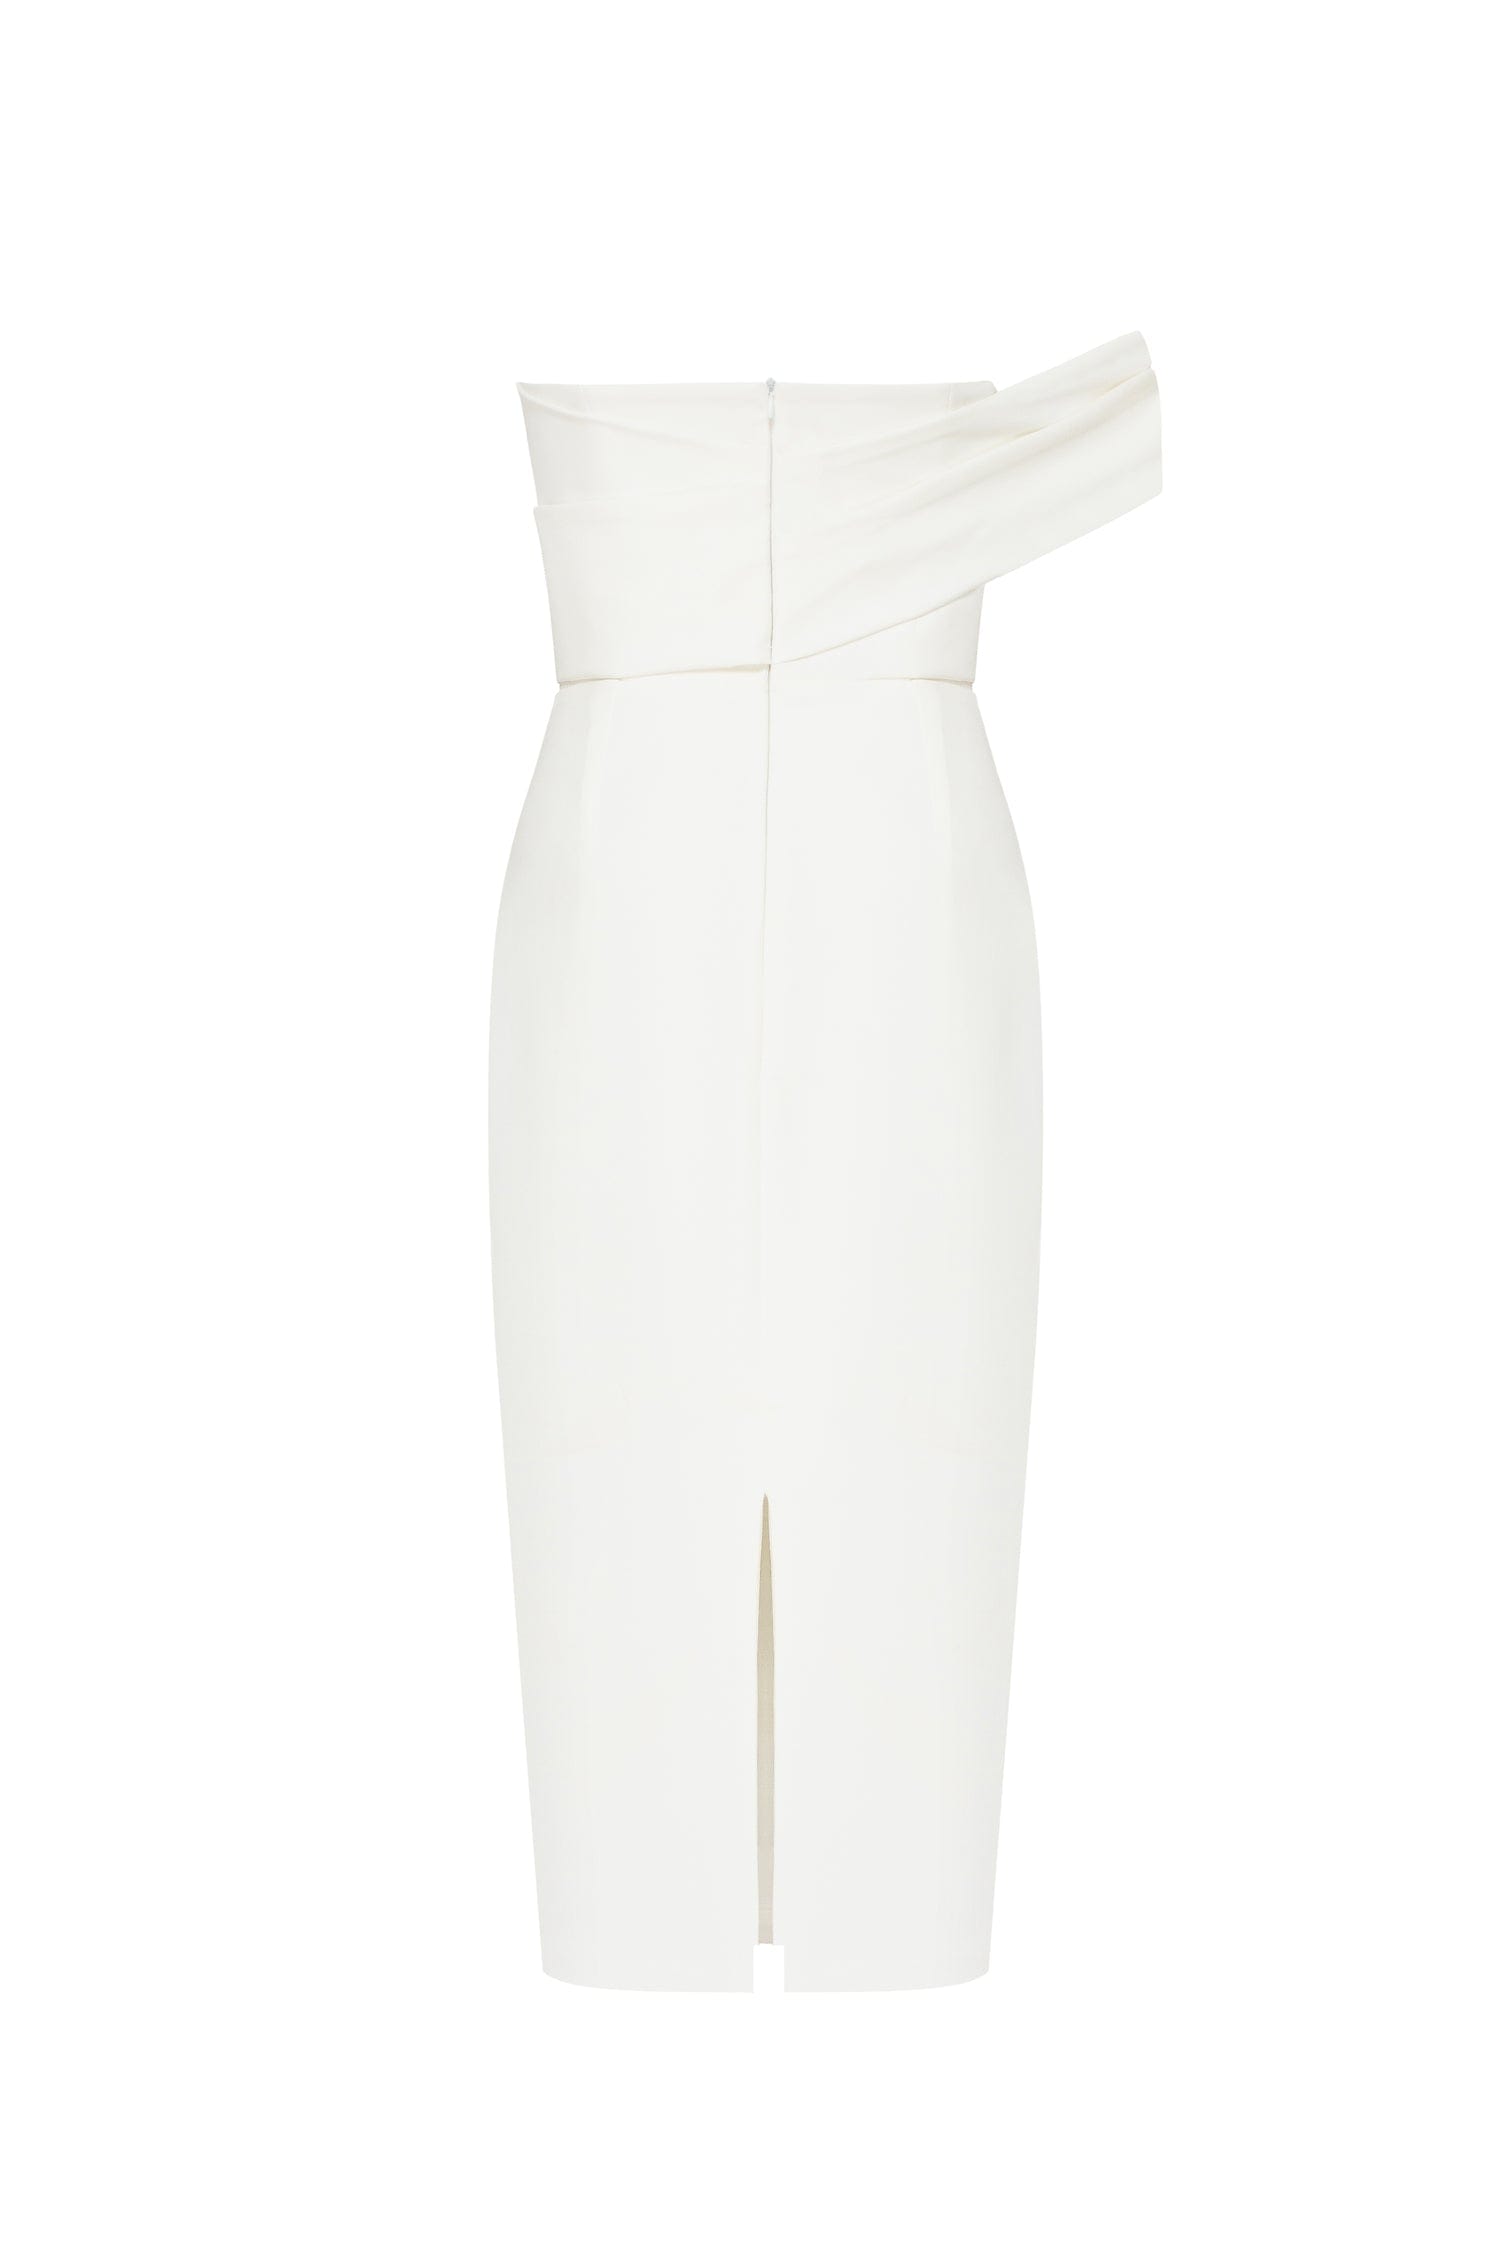 Ivory Classy midi dress with open neckline - Milla